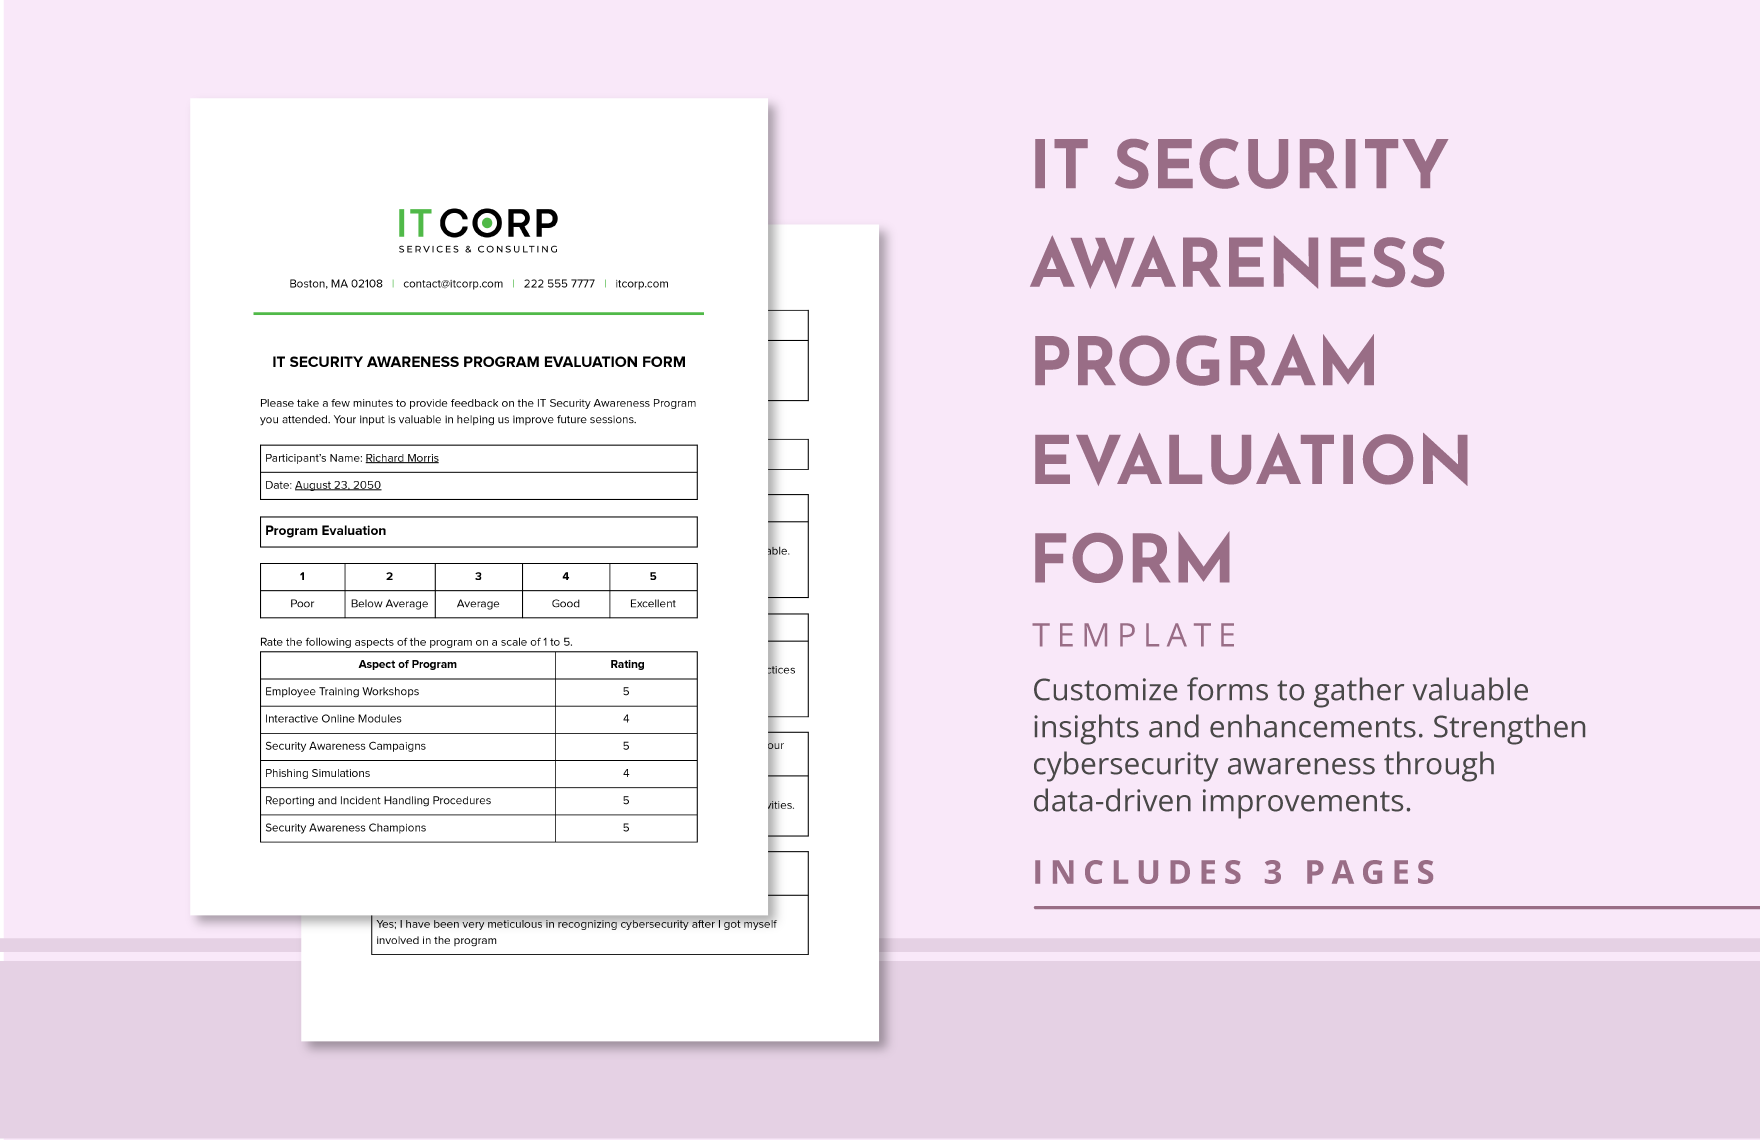 IT Security Awareness Program Evaluation Form Template